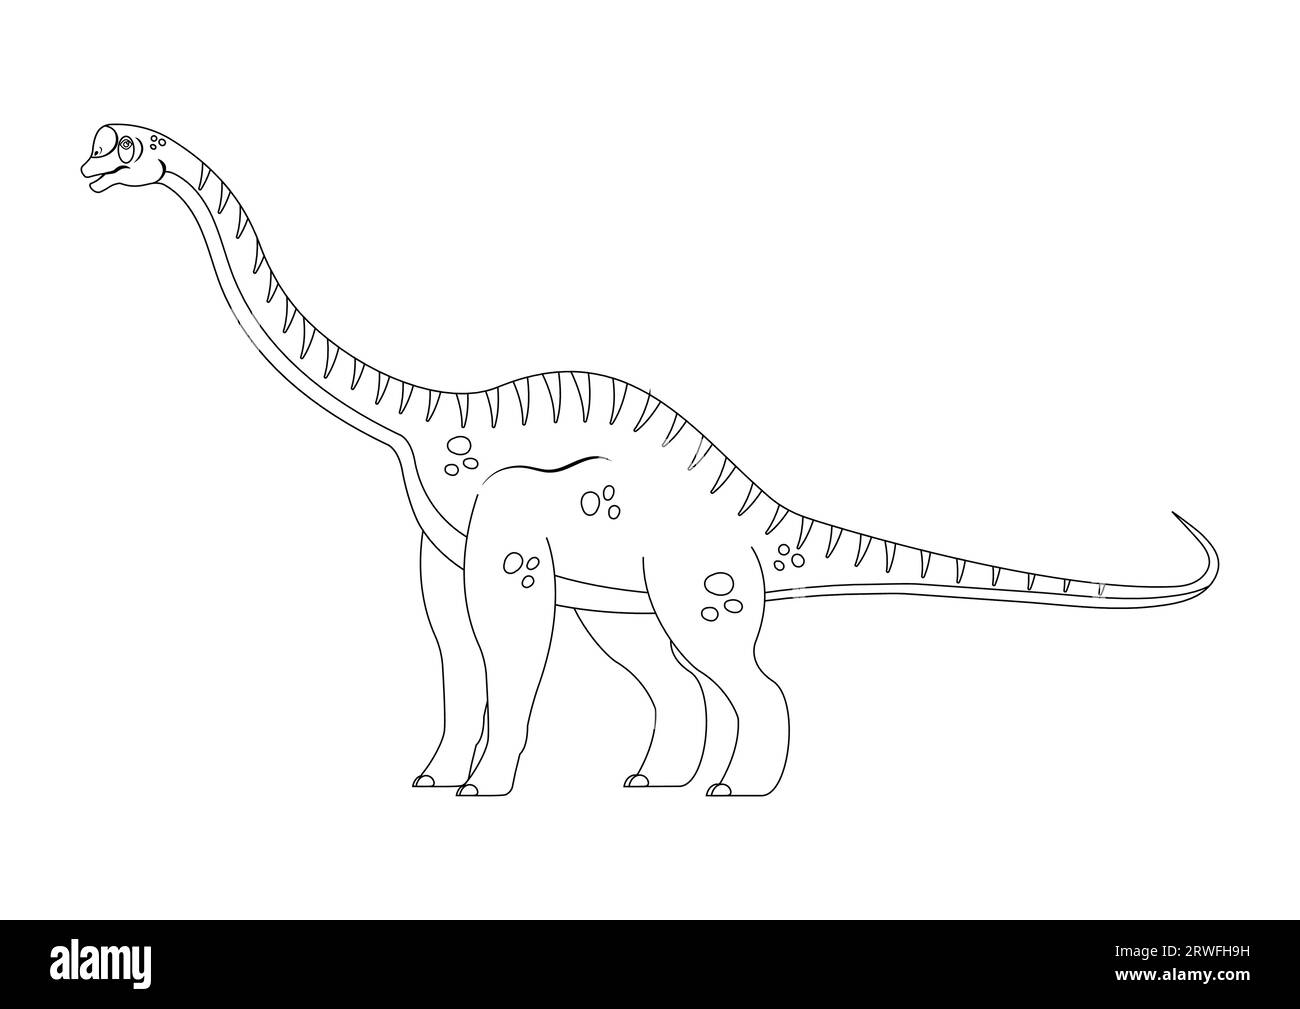 Noir et blanc Europasaurus Dinosaur Cartoon Character Vector. Coloriage d'un dinosaure Europasaurus Illustration de Vecteur